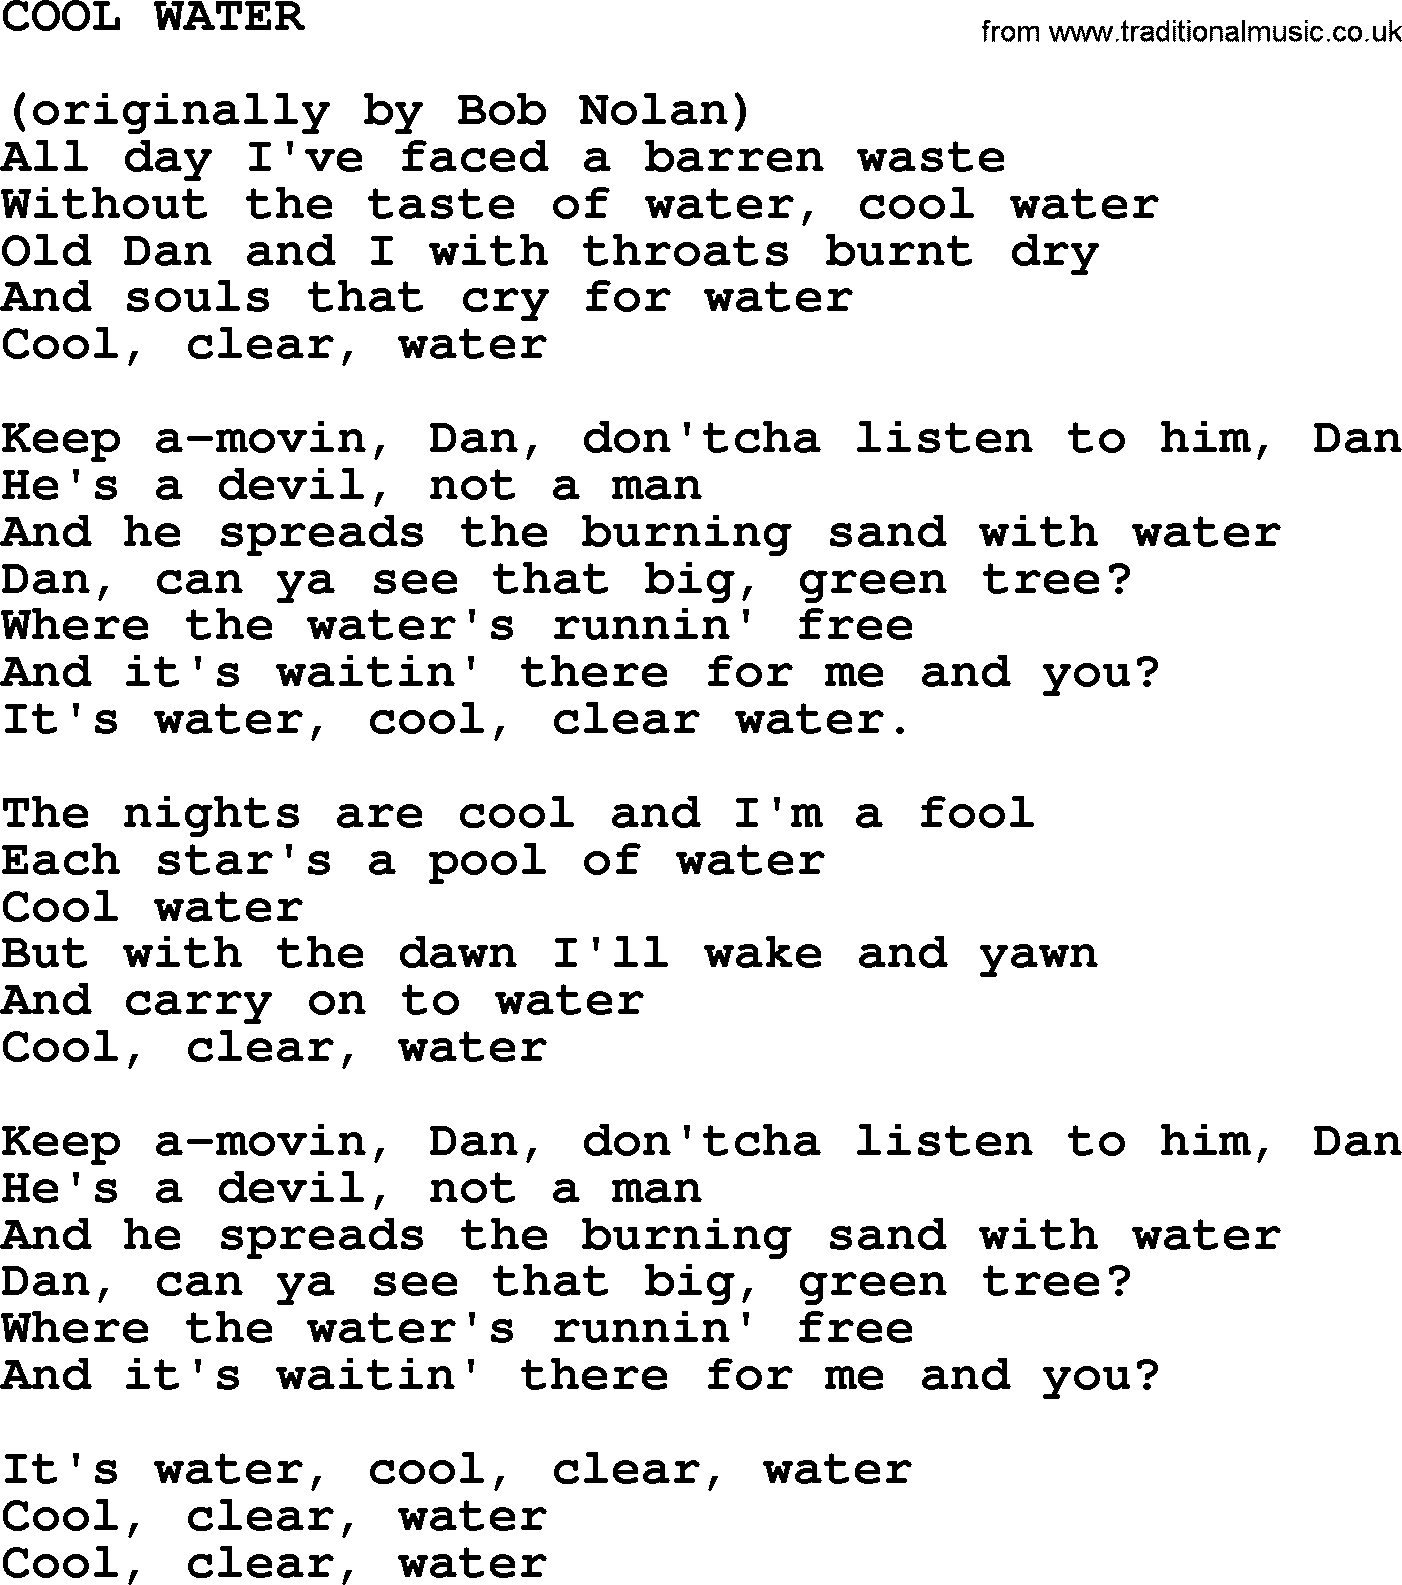 Johnny Cash song Cool Water.txt lyrics